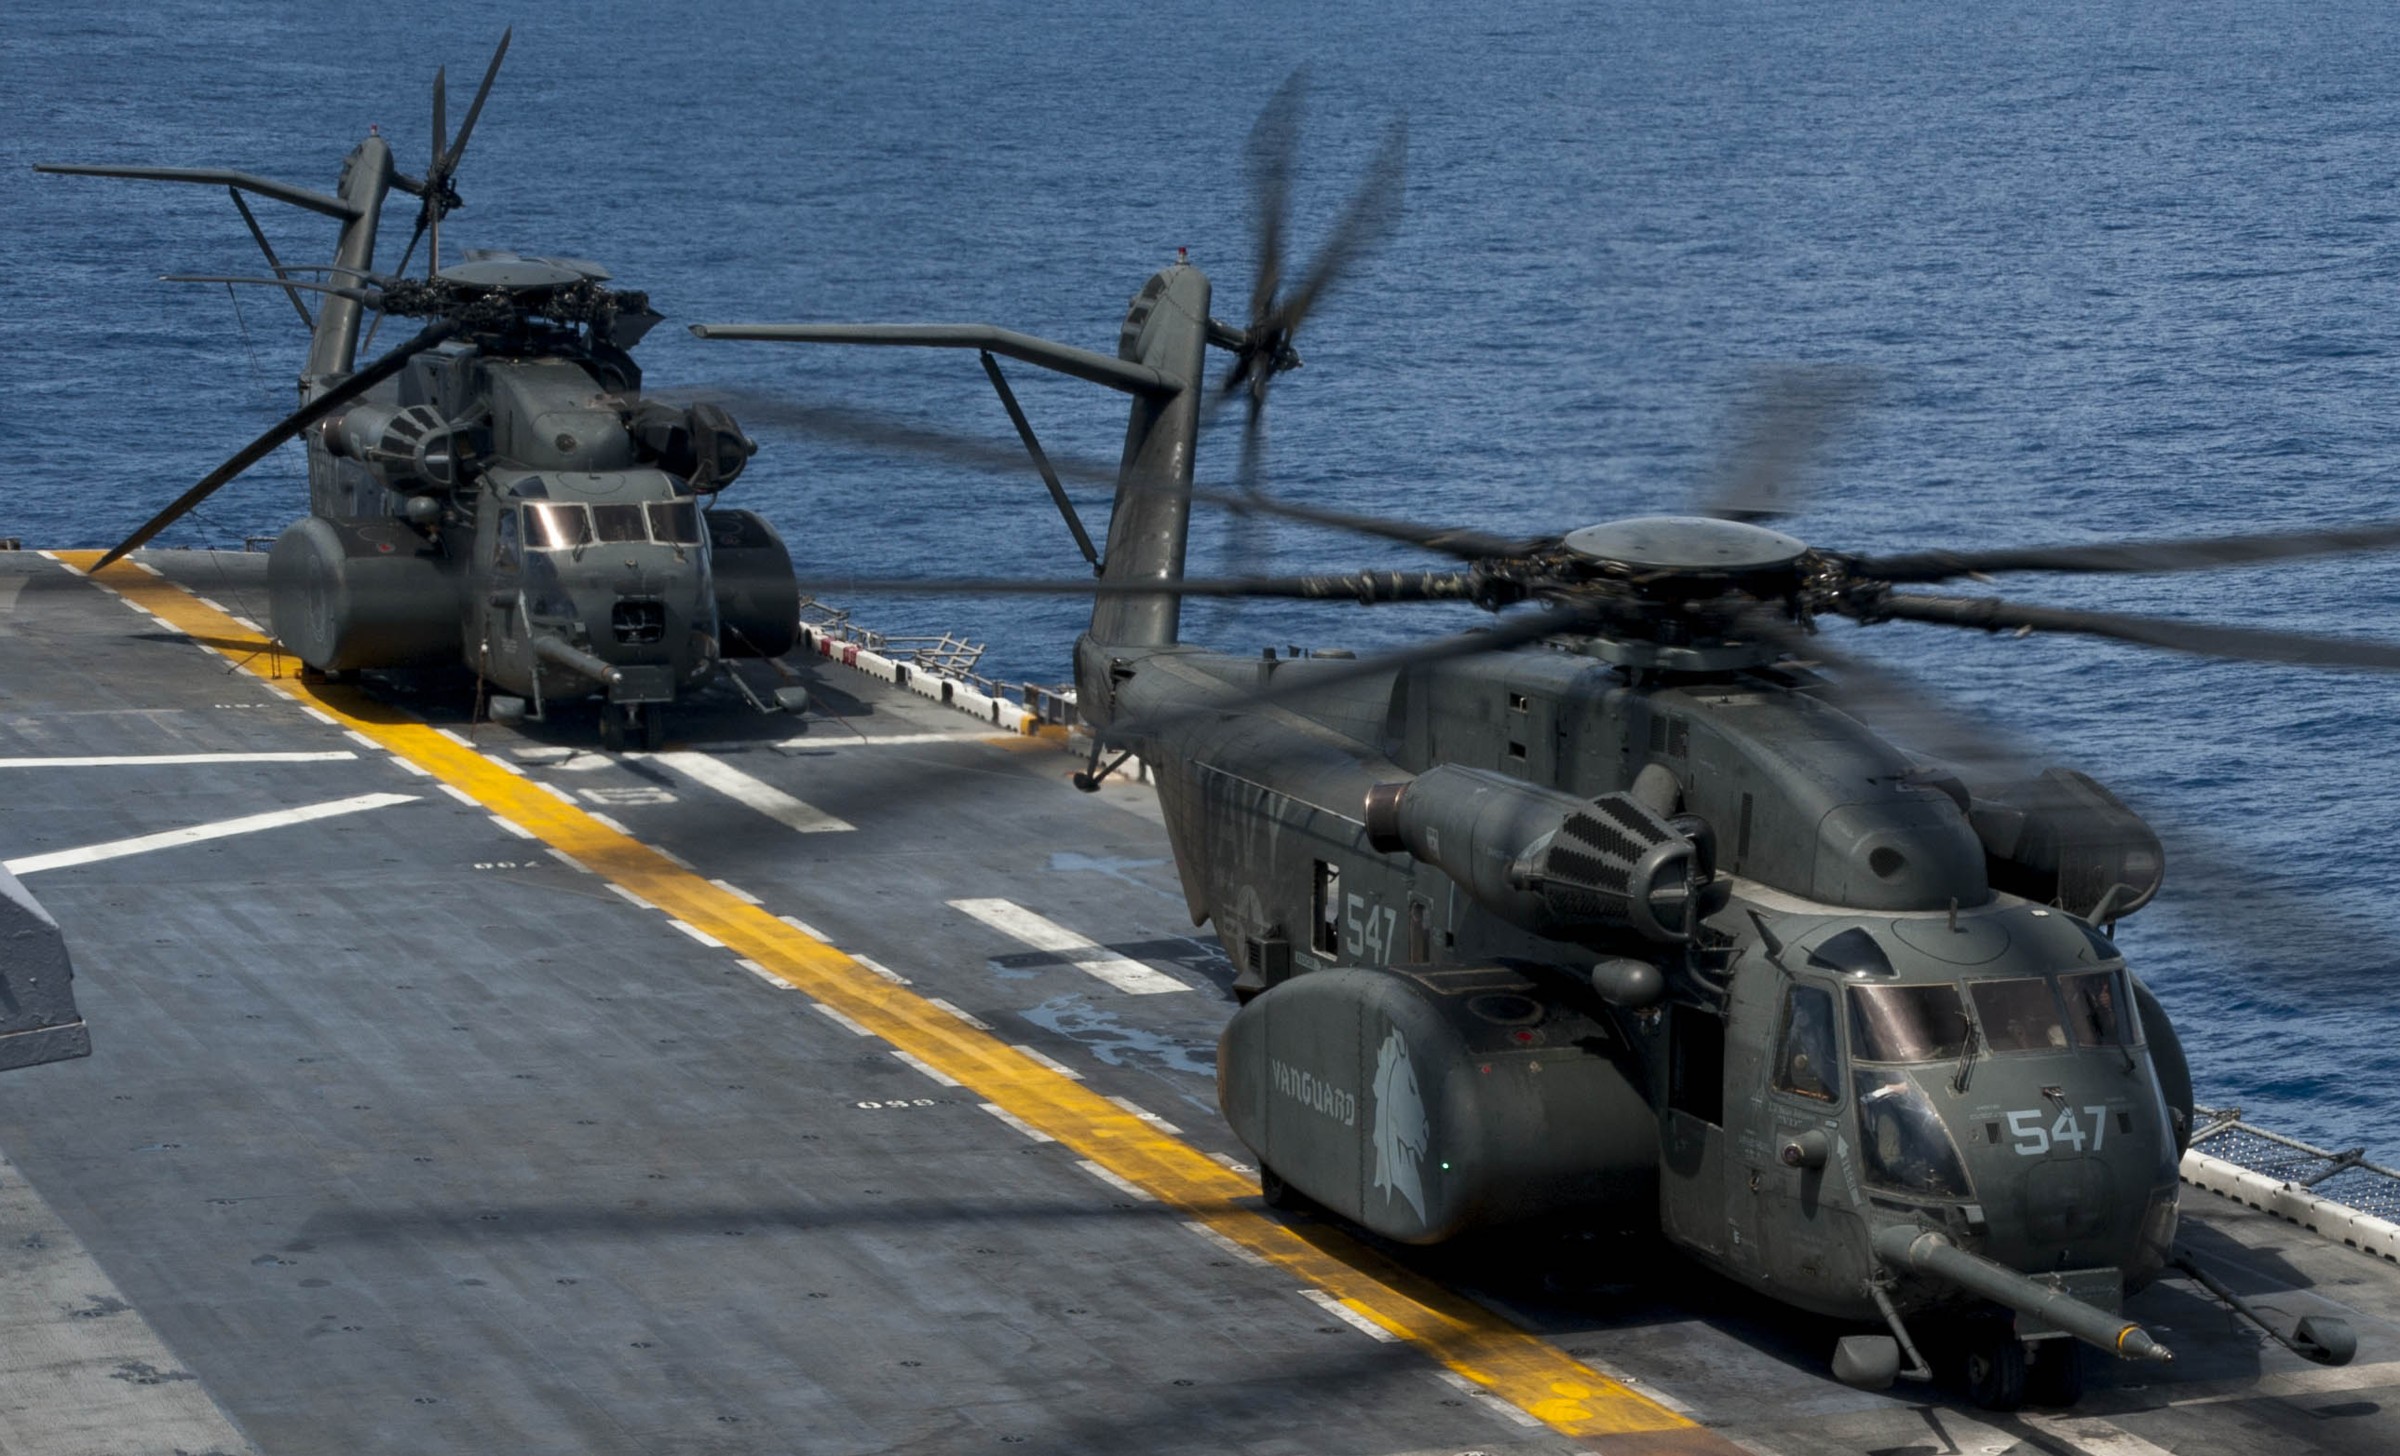 hm-14 vanguard helicopter mine countermeasures squadron navy mh-53e sea dragon 126